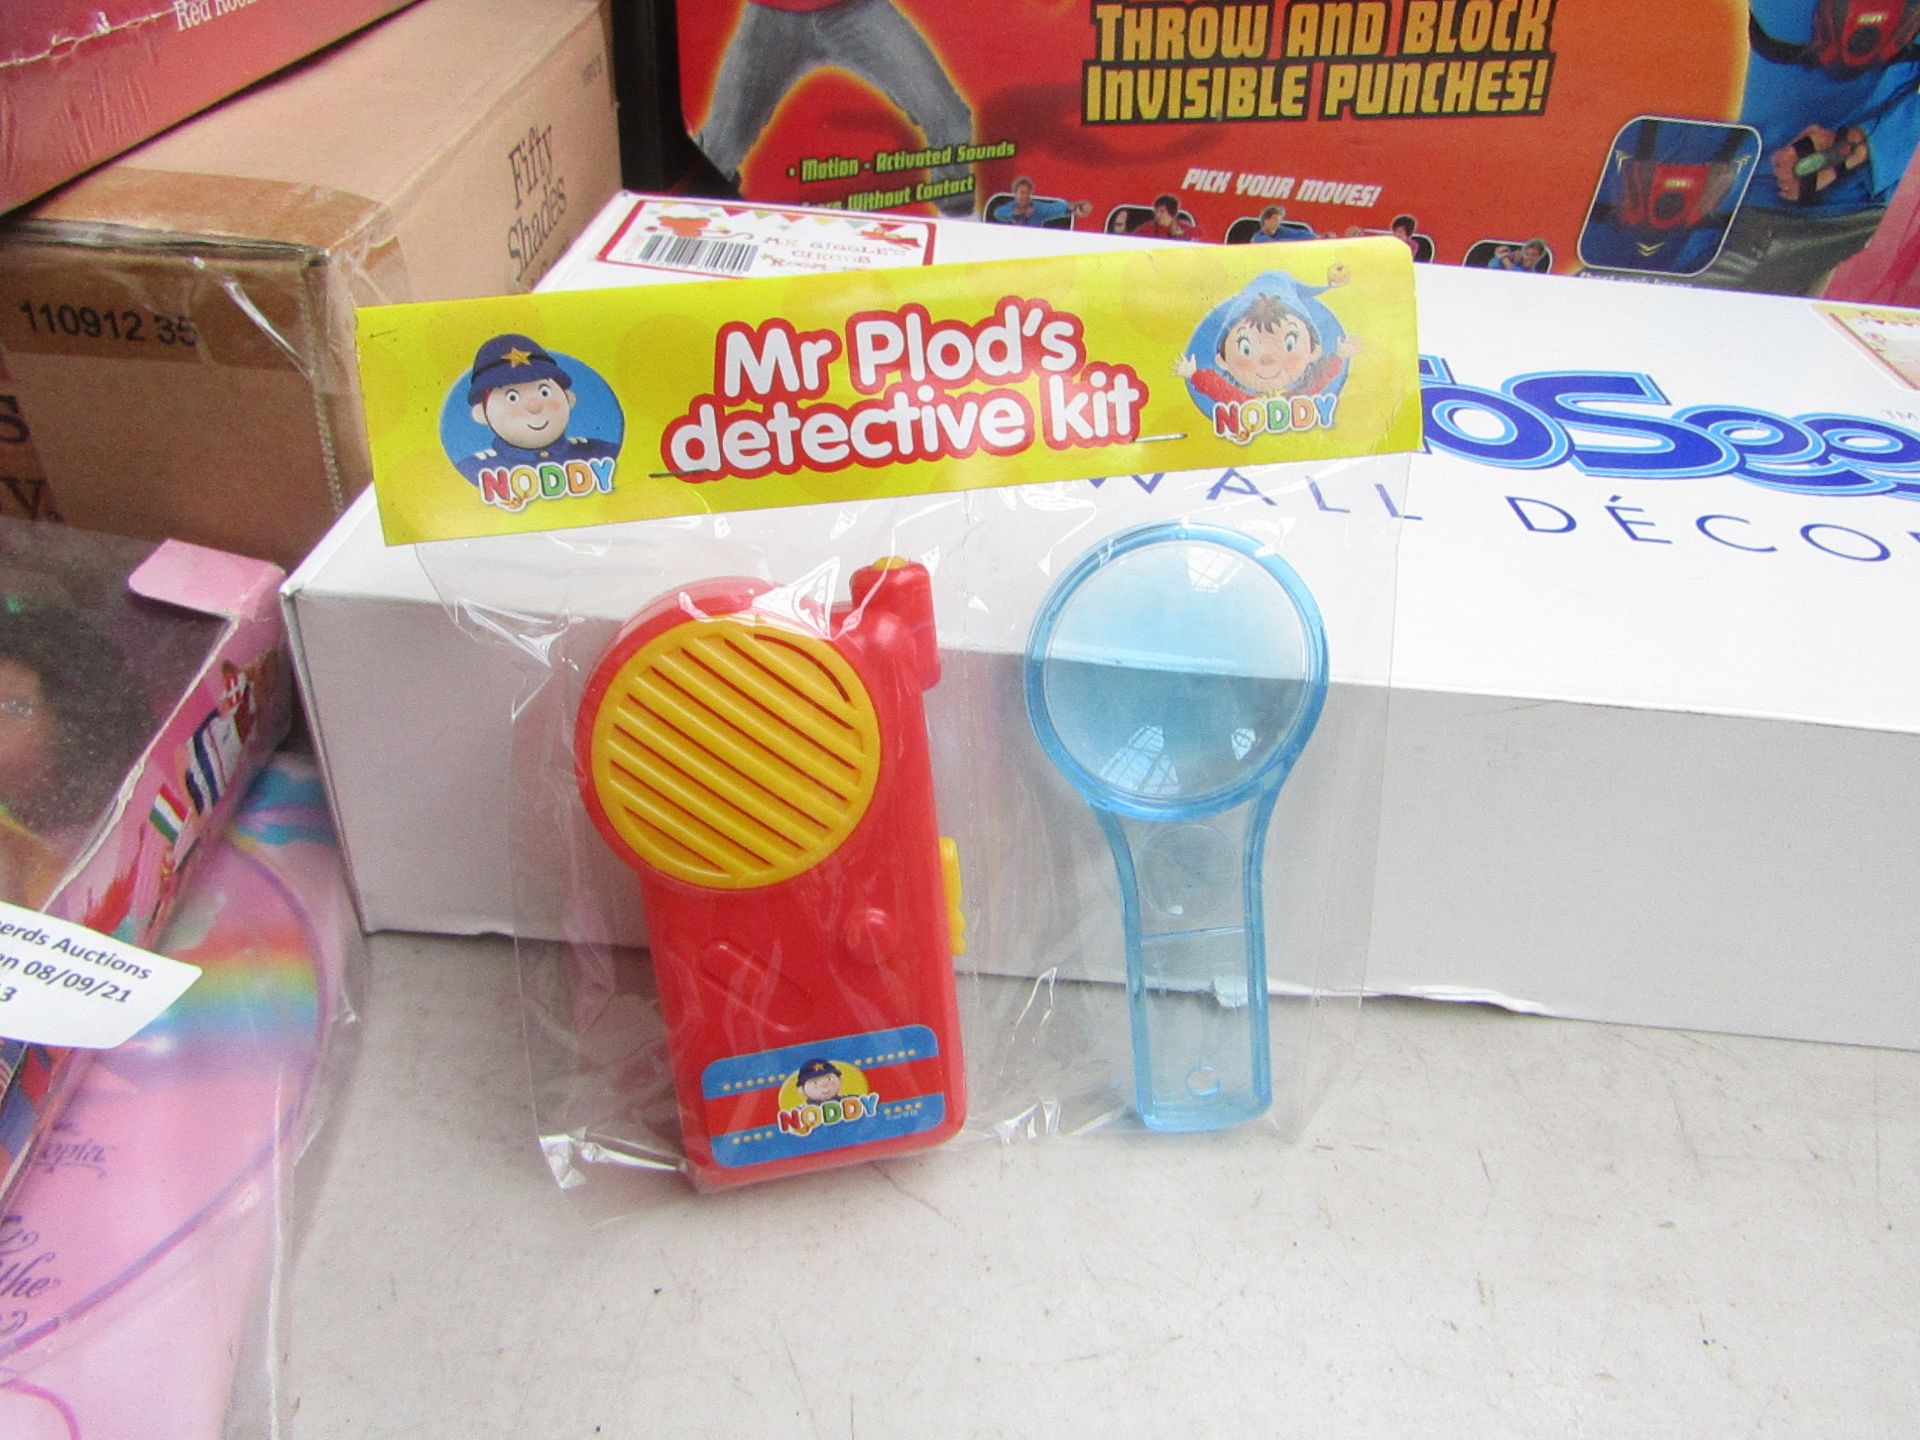 5x Noddy mr plods detective kit - new & sealed.